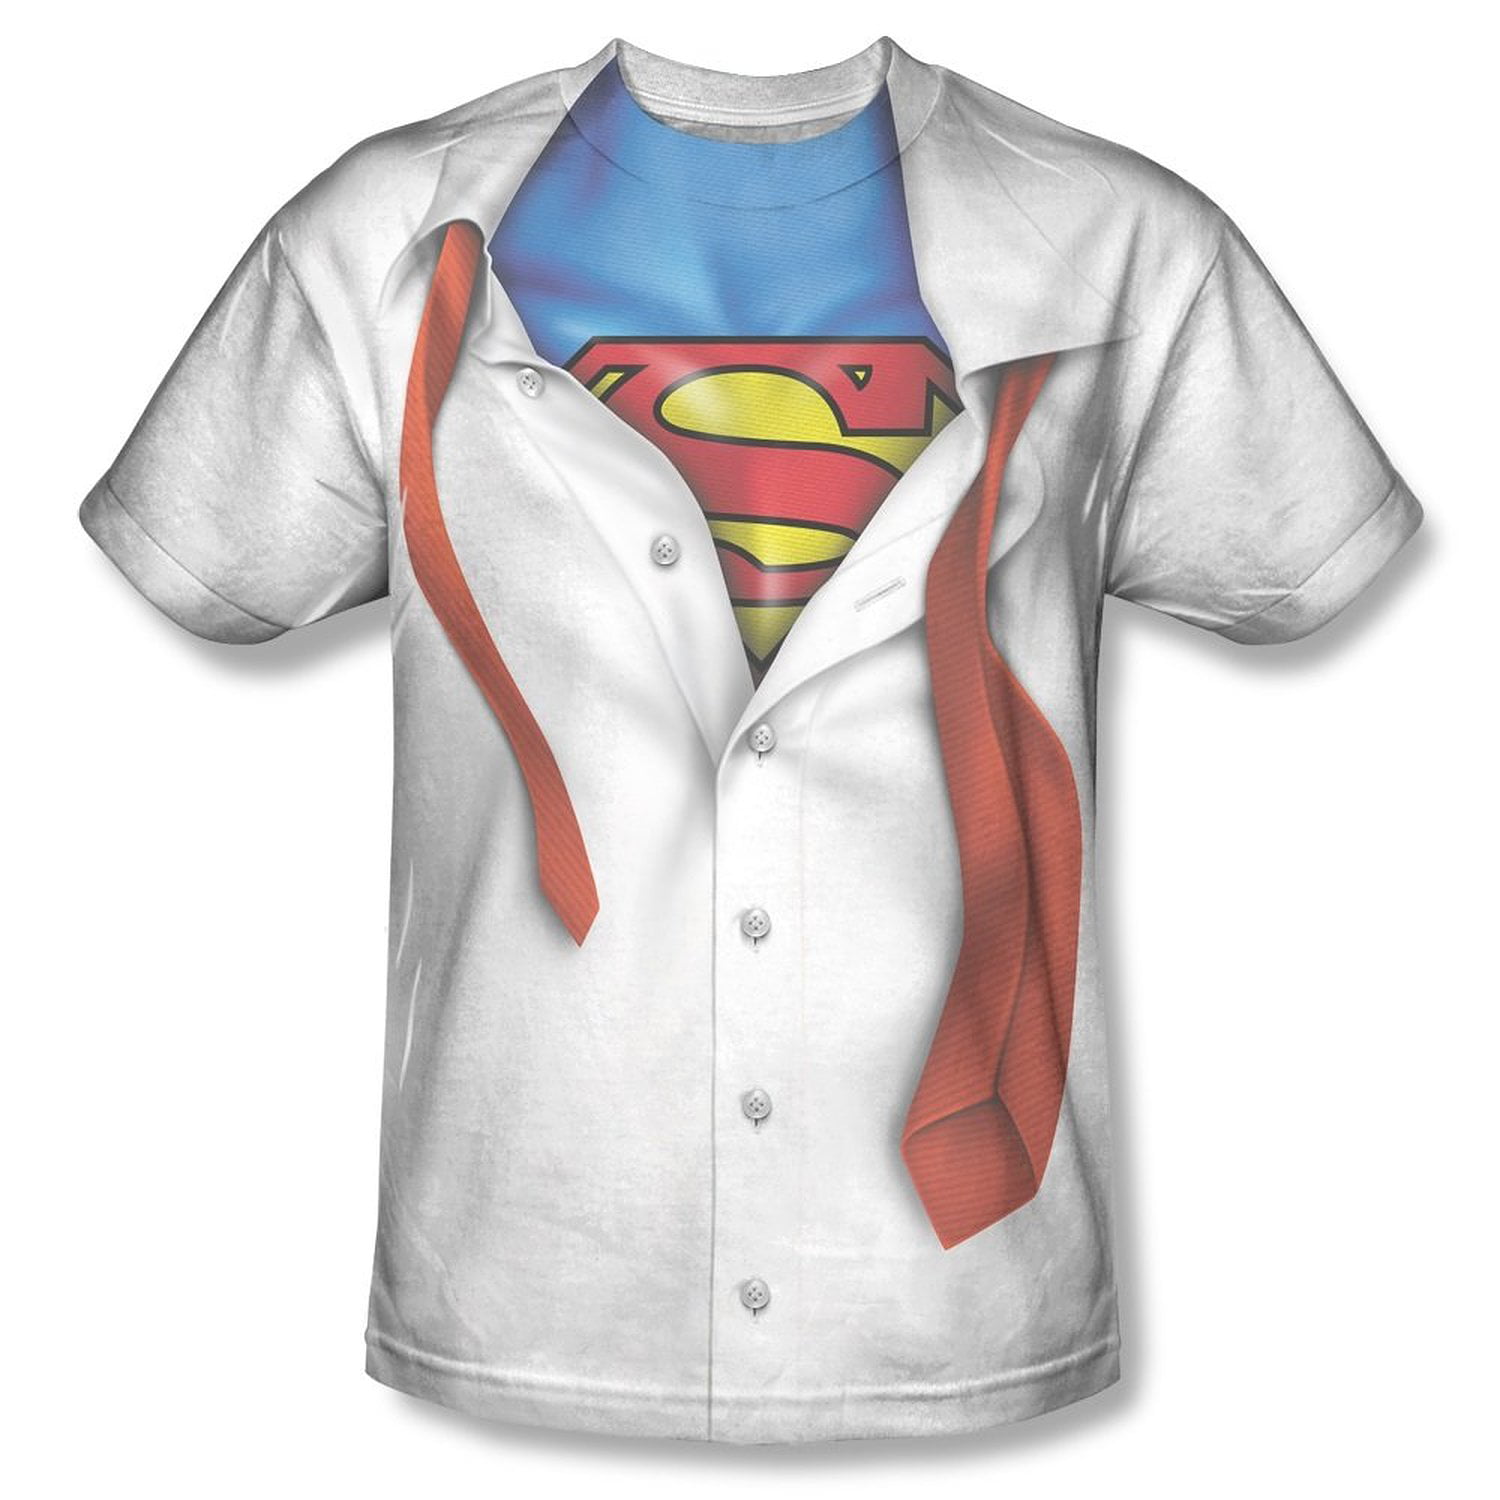 Clark Kent Superman T-Shirt Costume Transform Tie Super Hero Adult